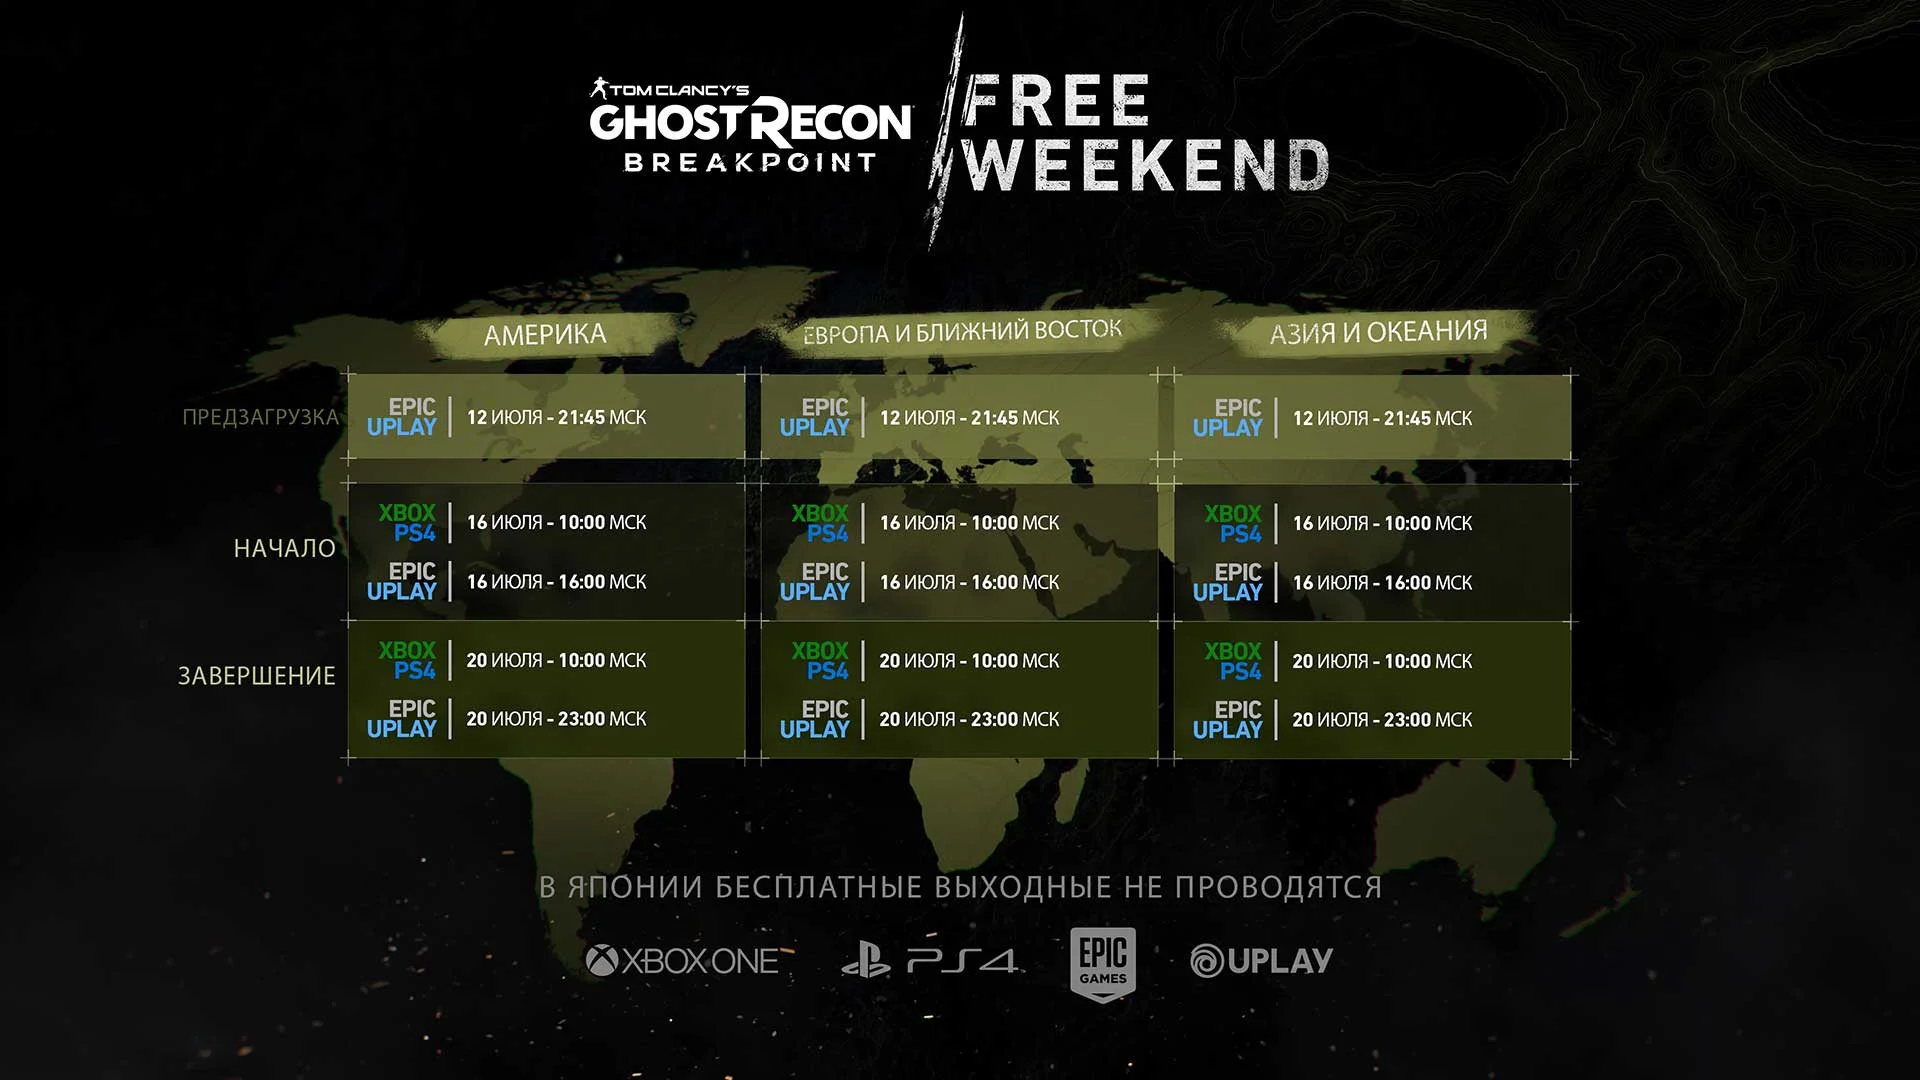 ИИ-напарников добавят в Ghost Recon Breakpoint уже 15 июля - фото 1